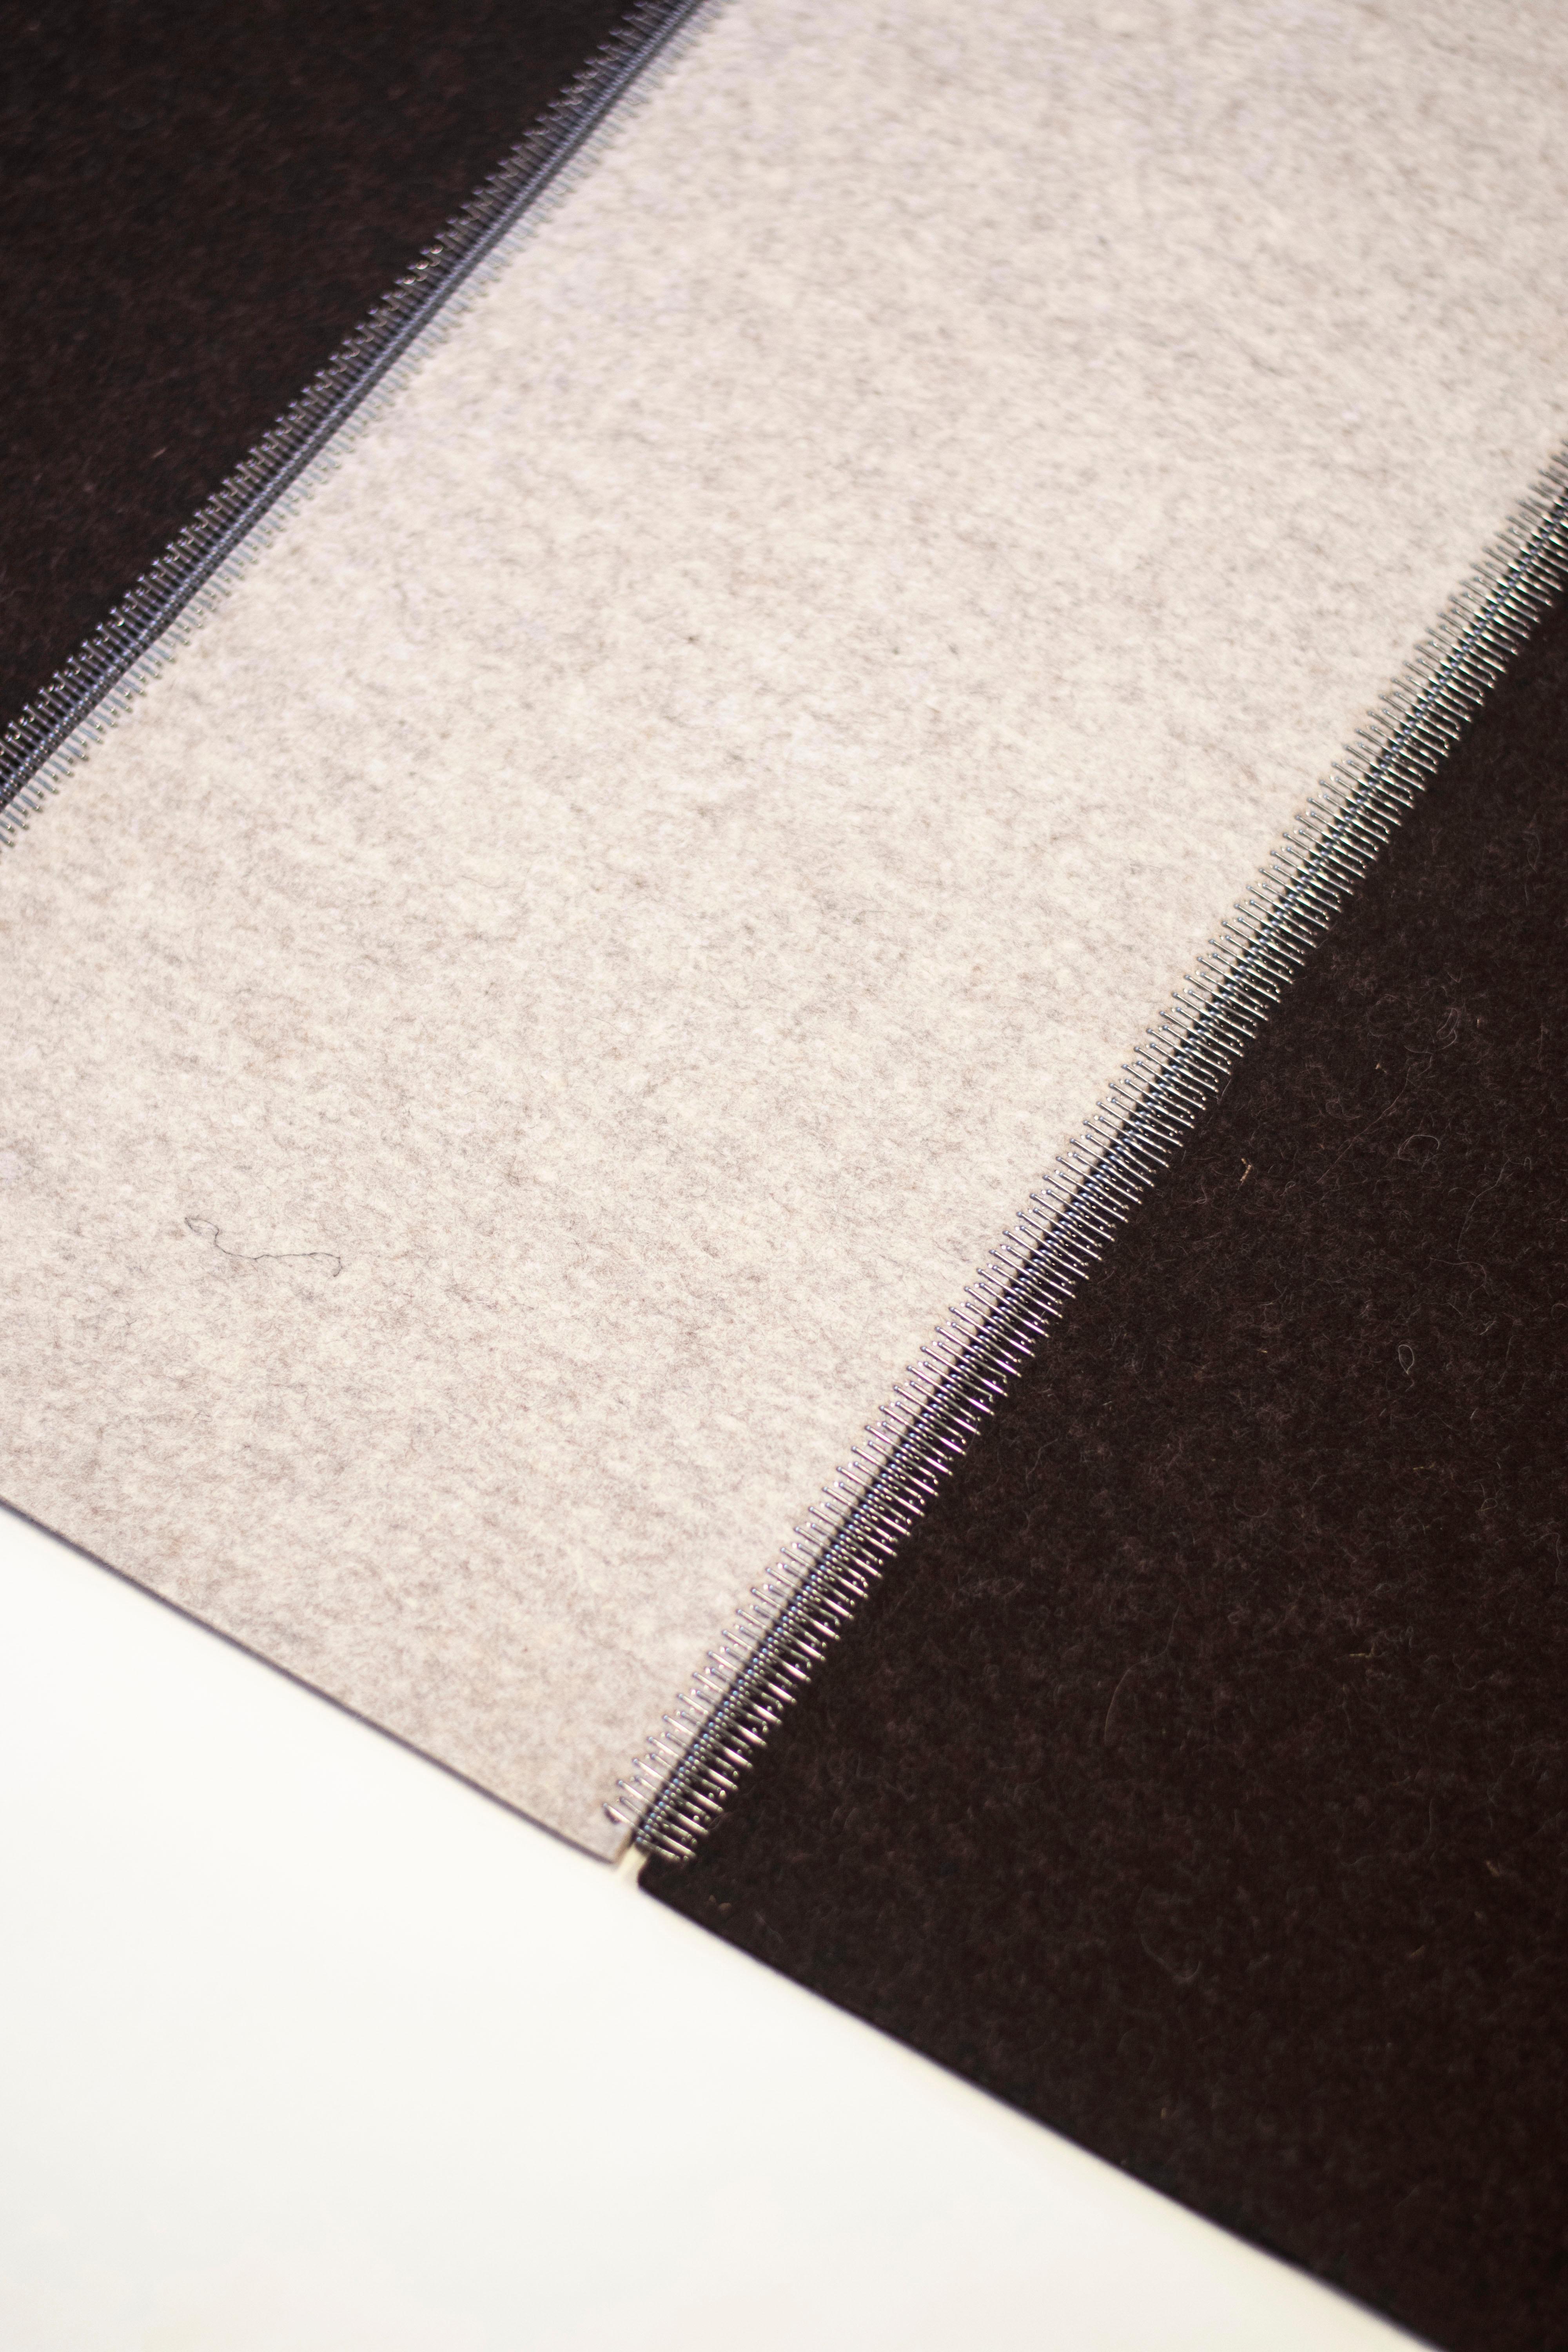 Industrial zip-hinge steel lacing connects 100% wool felt flooring. Colors used are Truffle Braun dark brown with beige sandwiched in between.